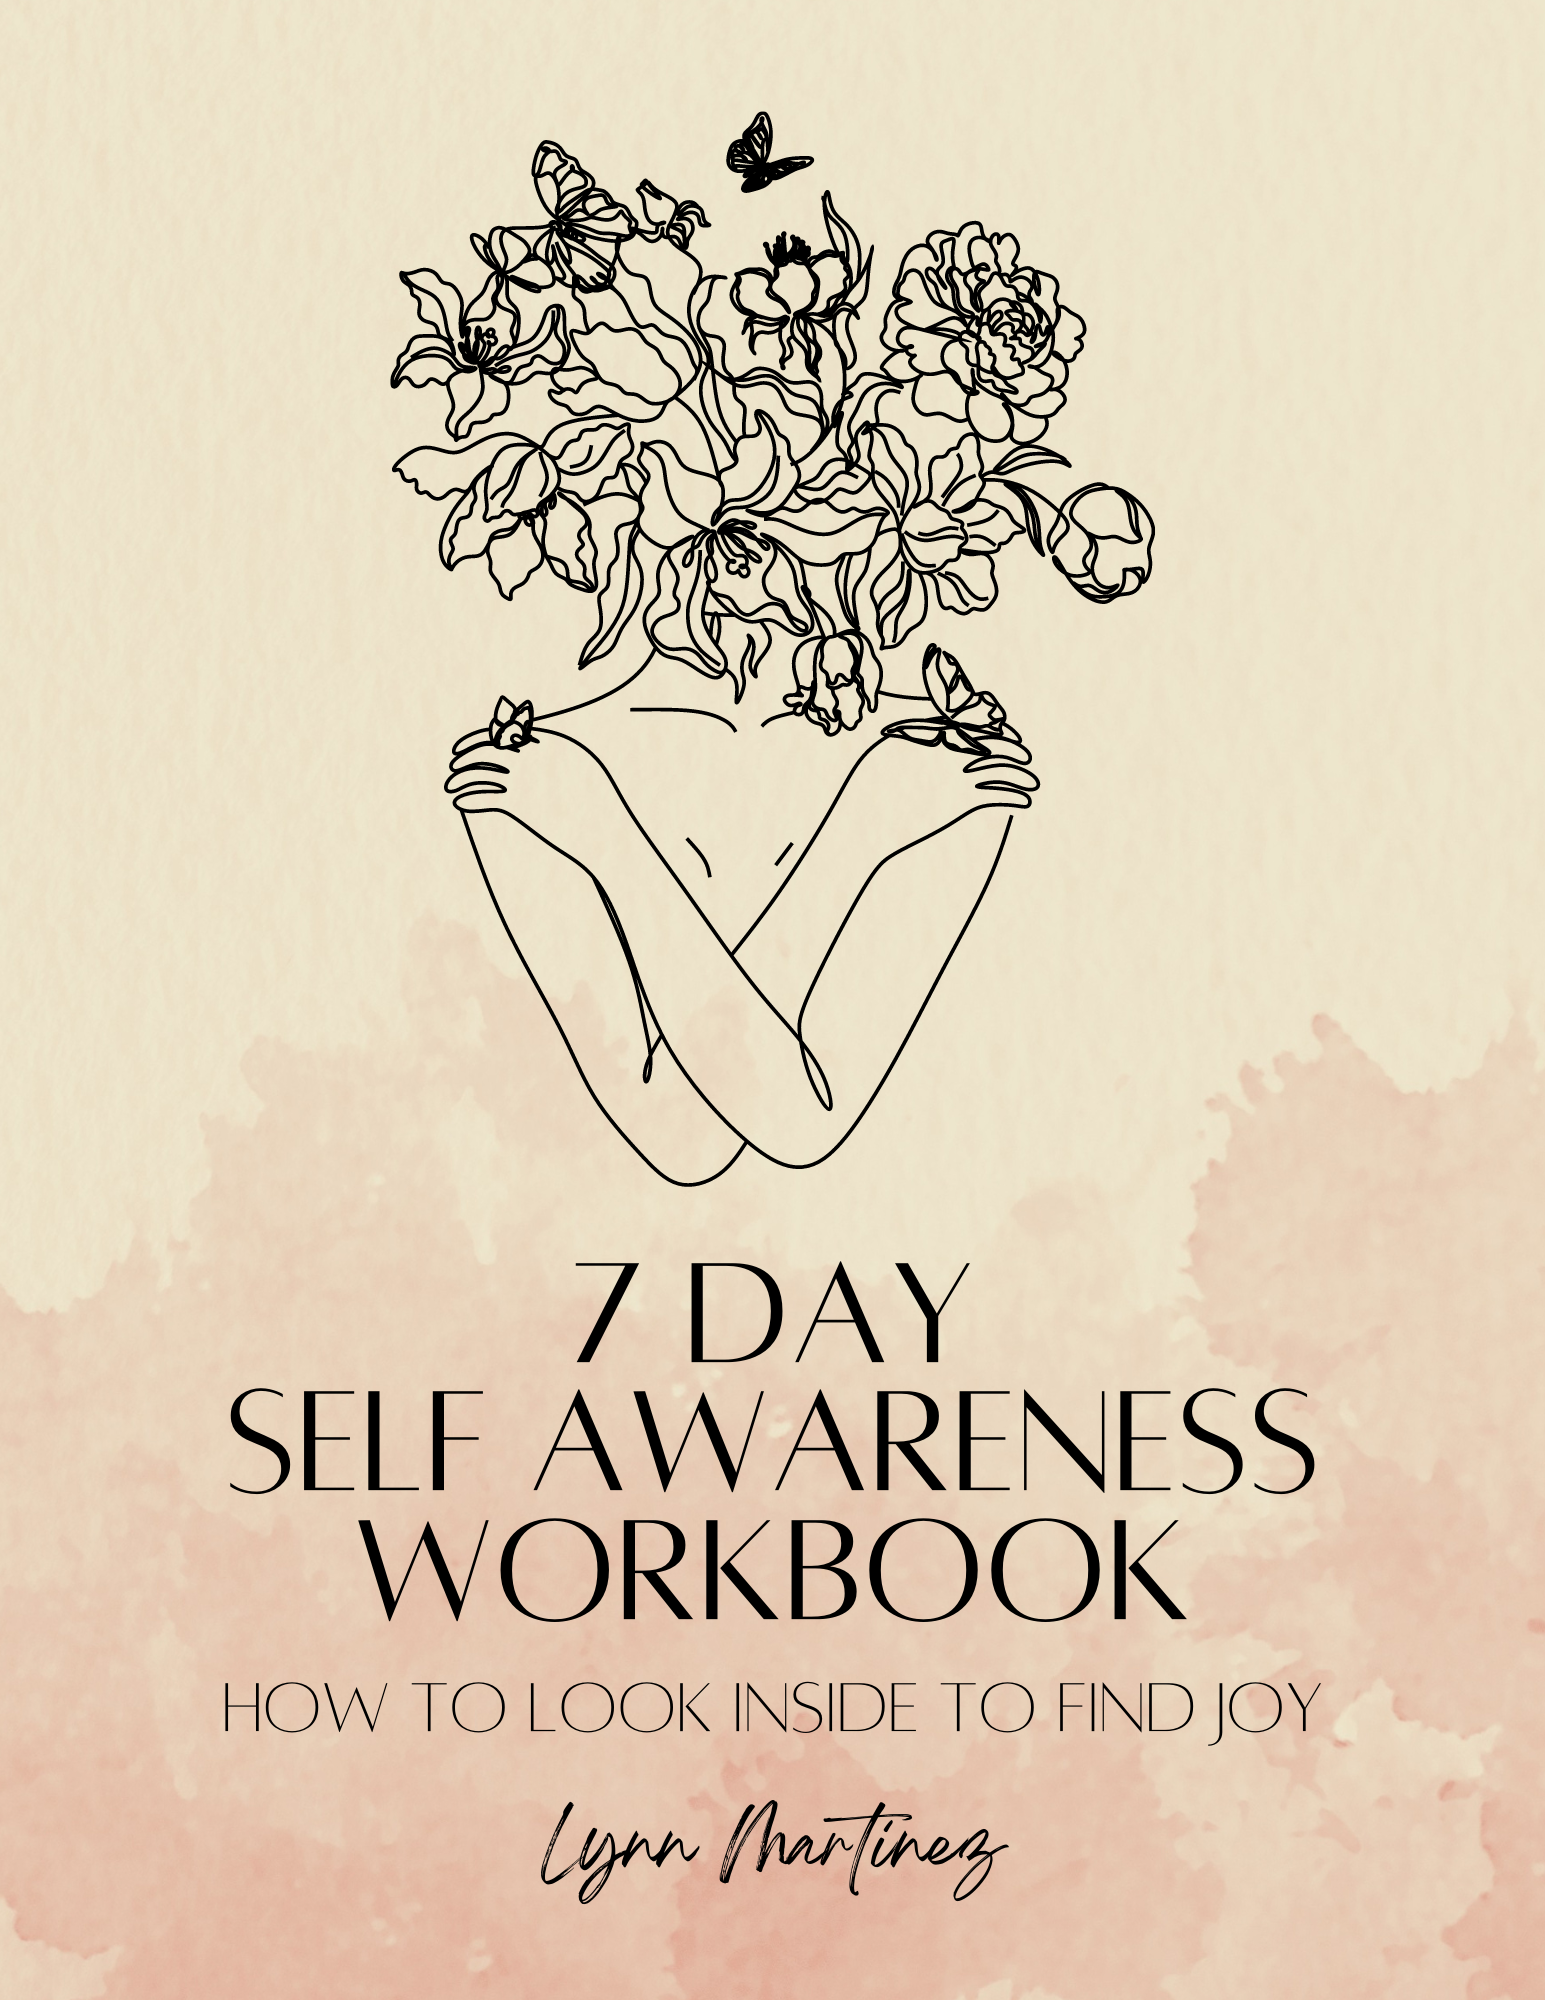 7 Day Self Awareness Workbook